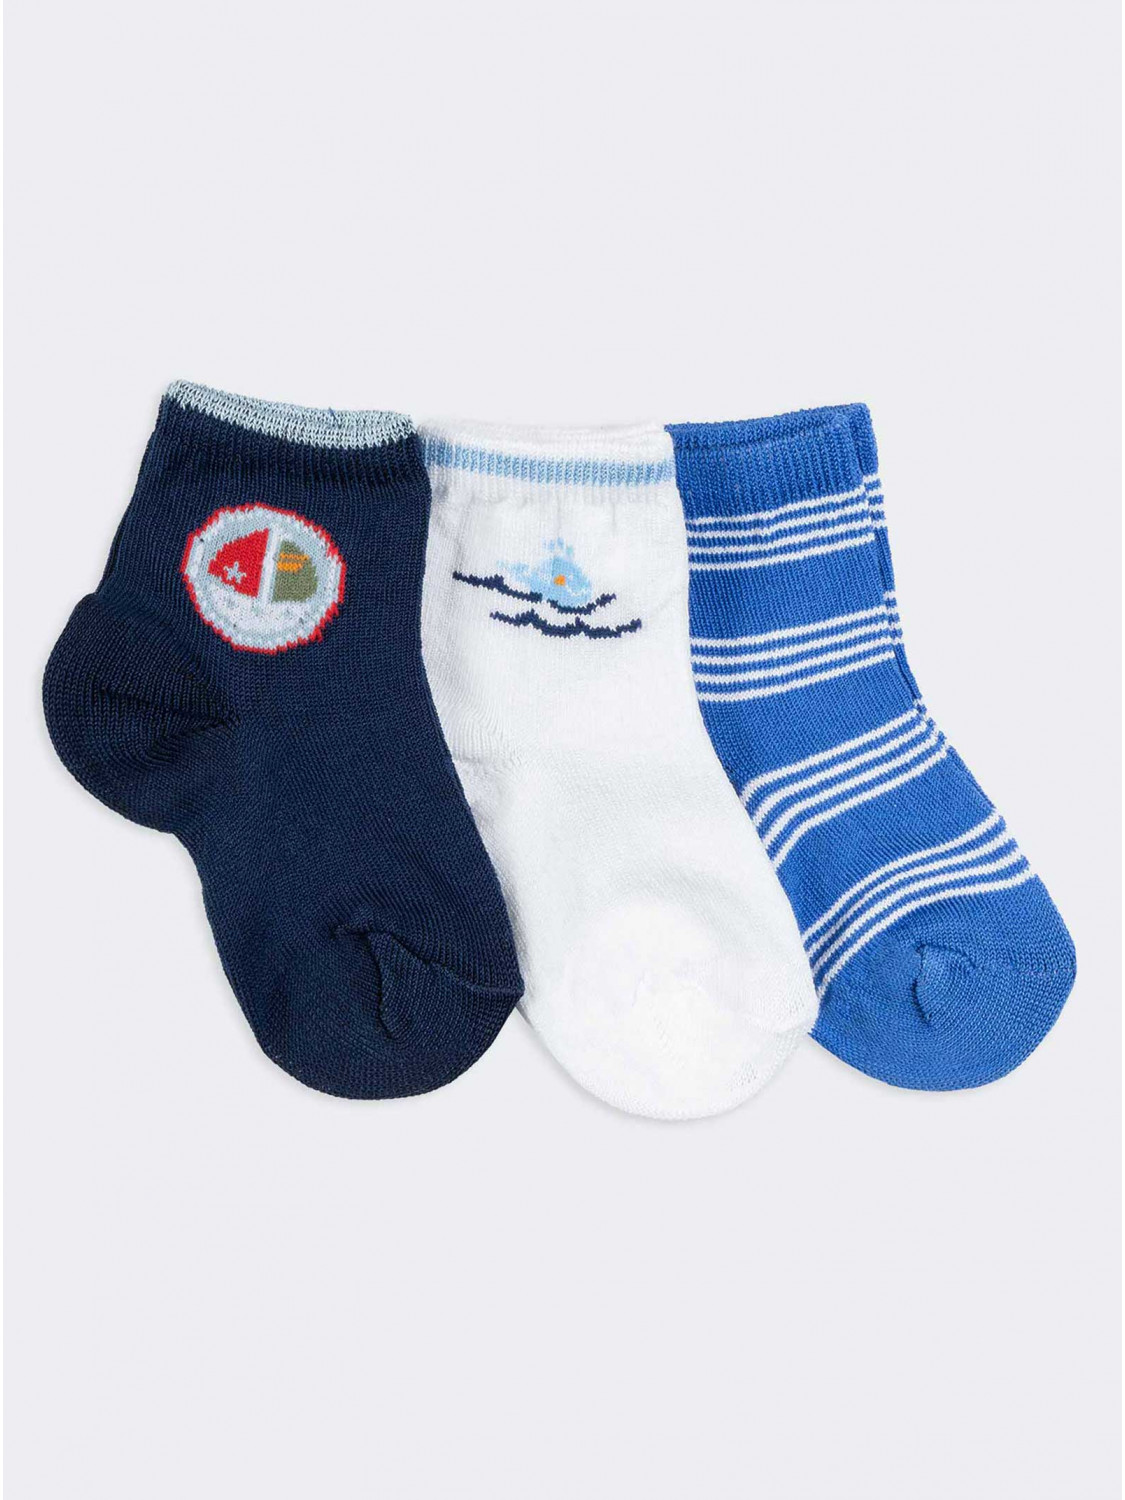 Kurzer Satz Socken mit Meeresmuster für Babys